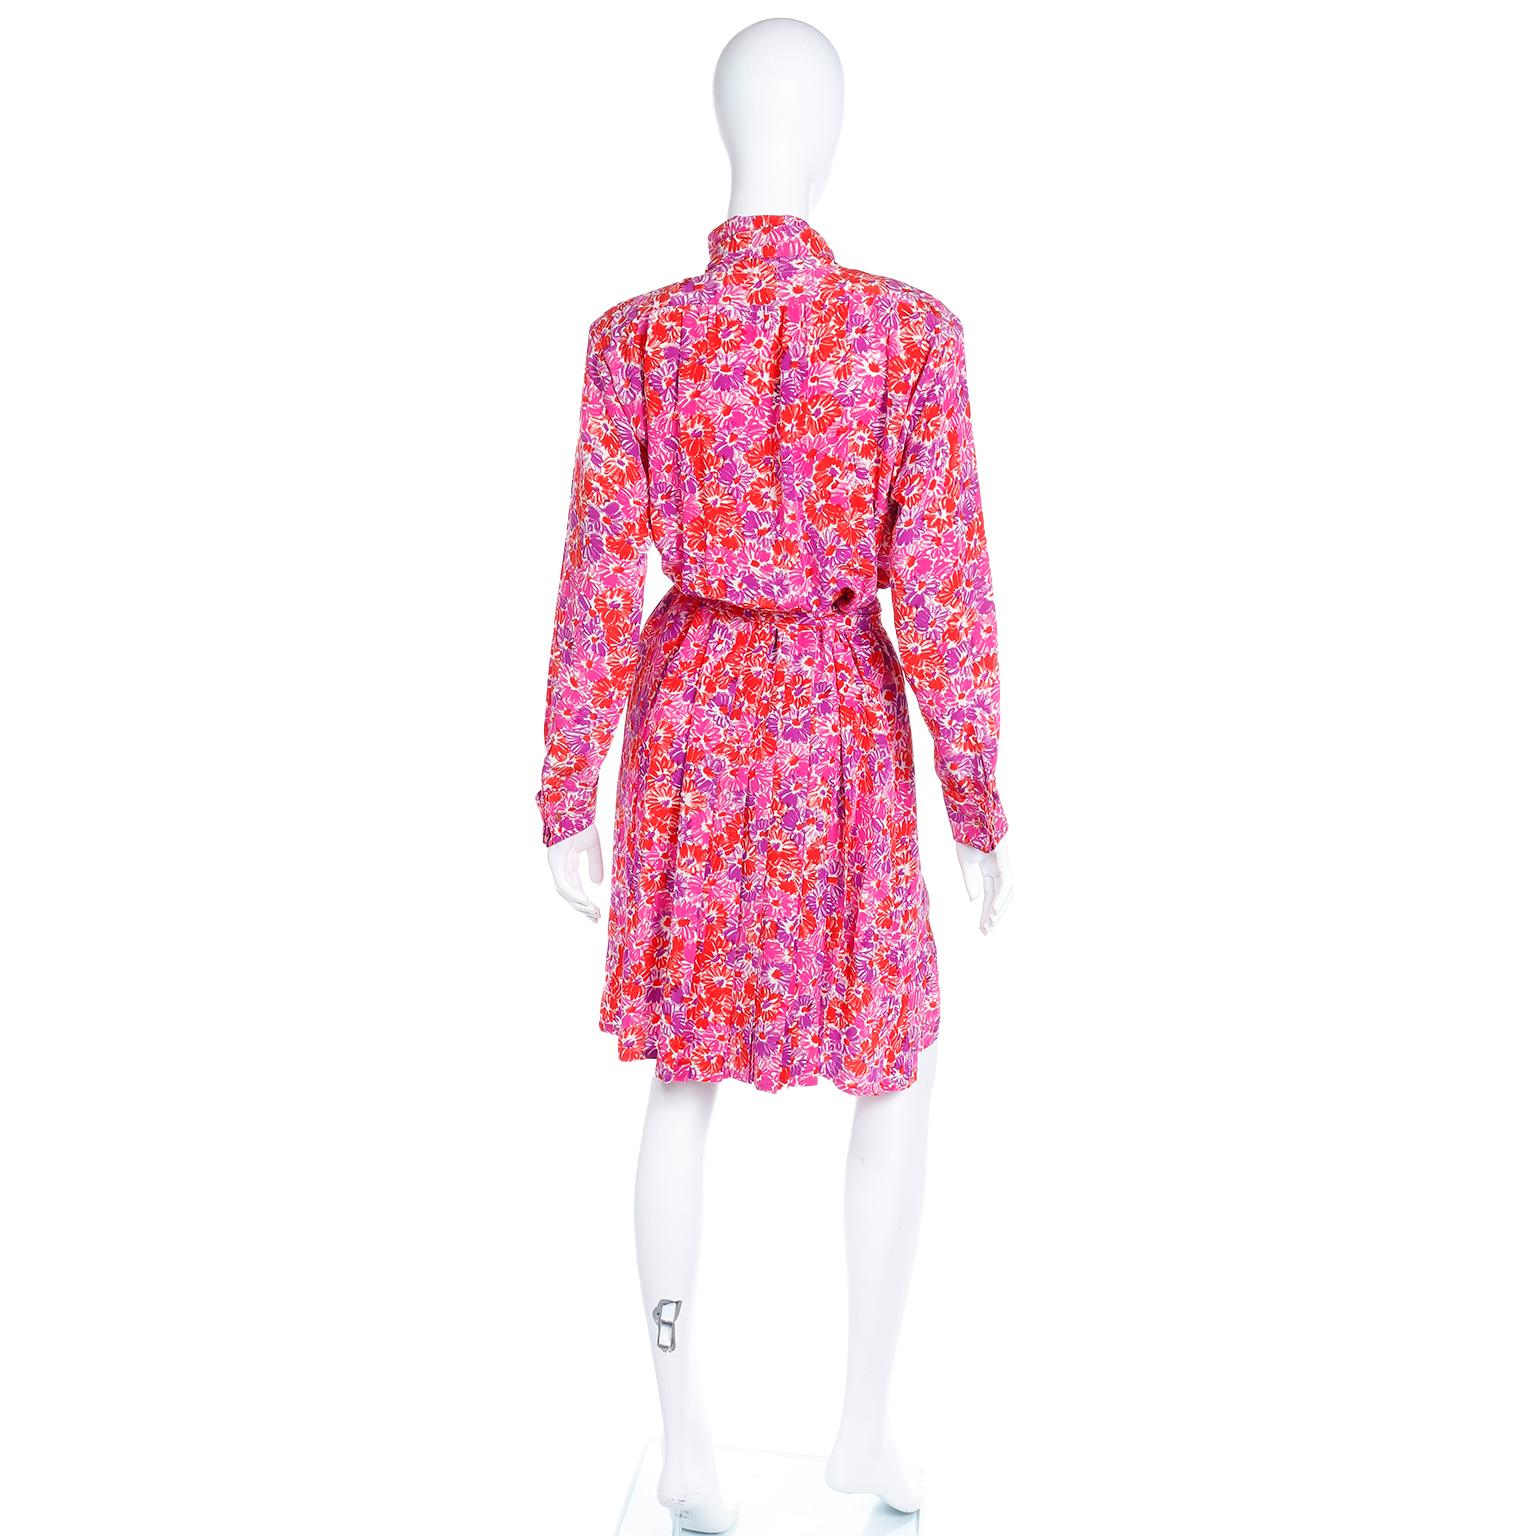 Yves Saint Laurent S/S 1989 Vintage Colorful Pink Floral Silk YSL Runway Dress For Sale 1